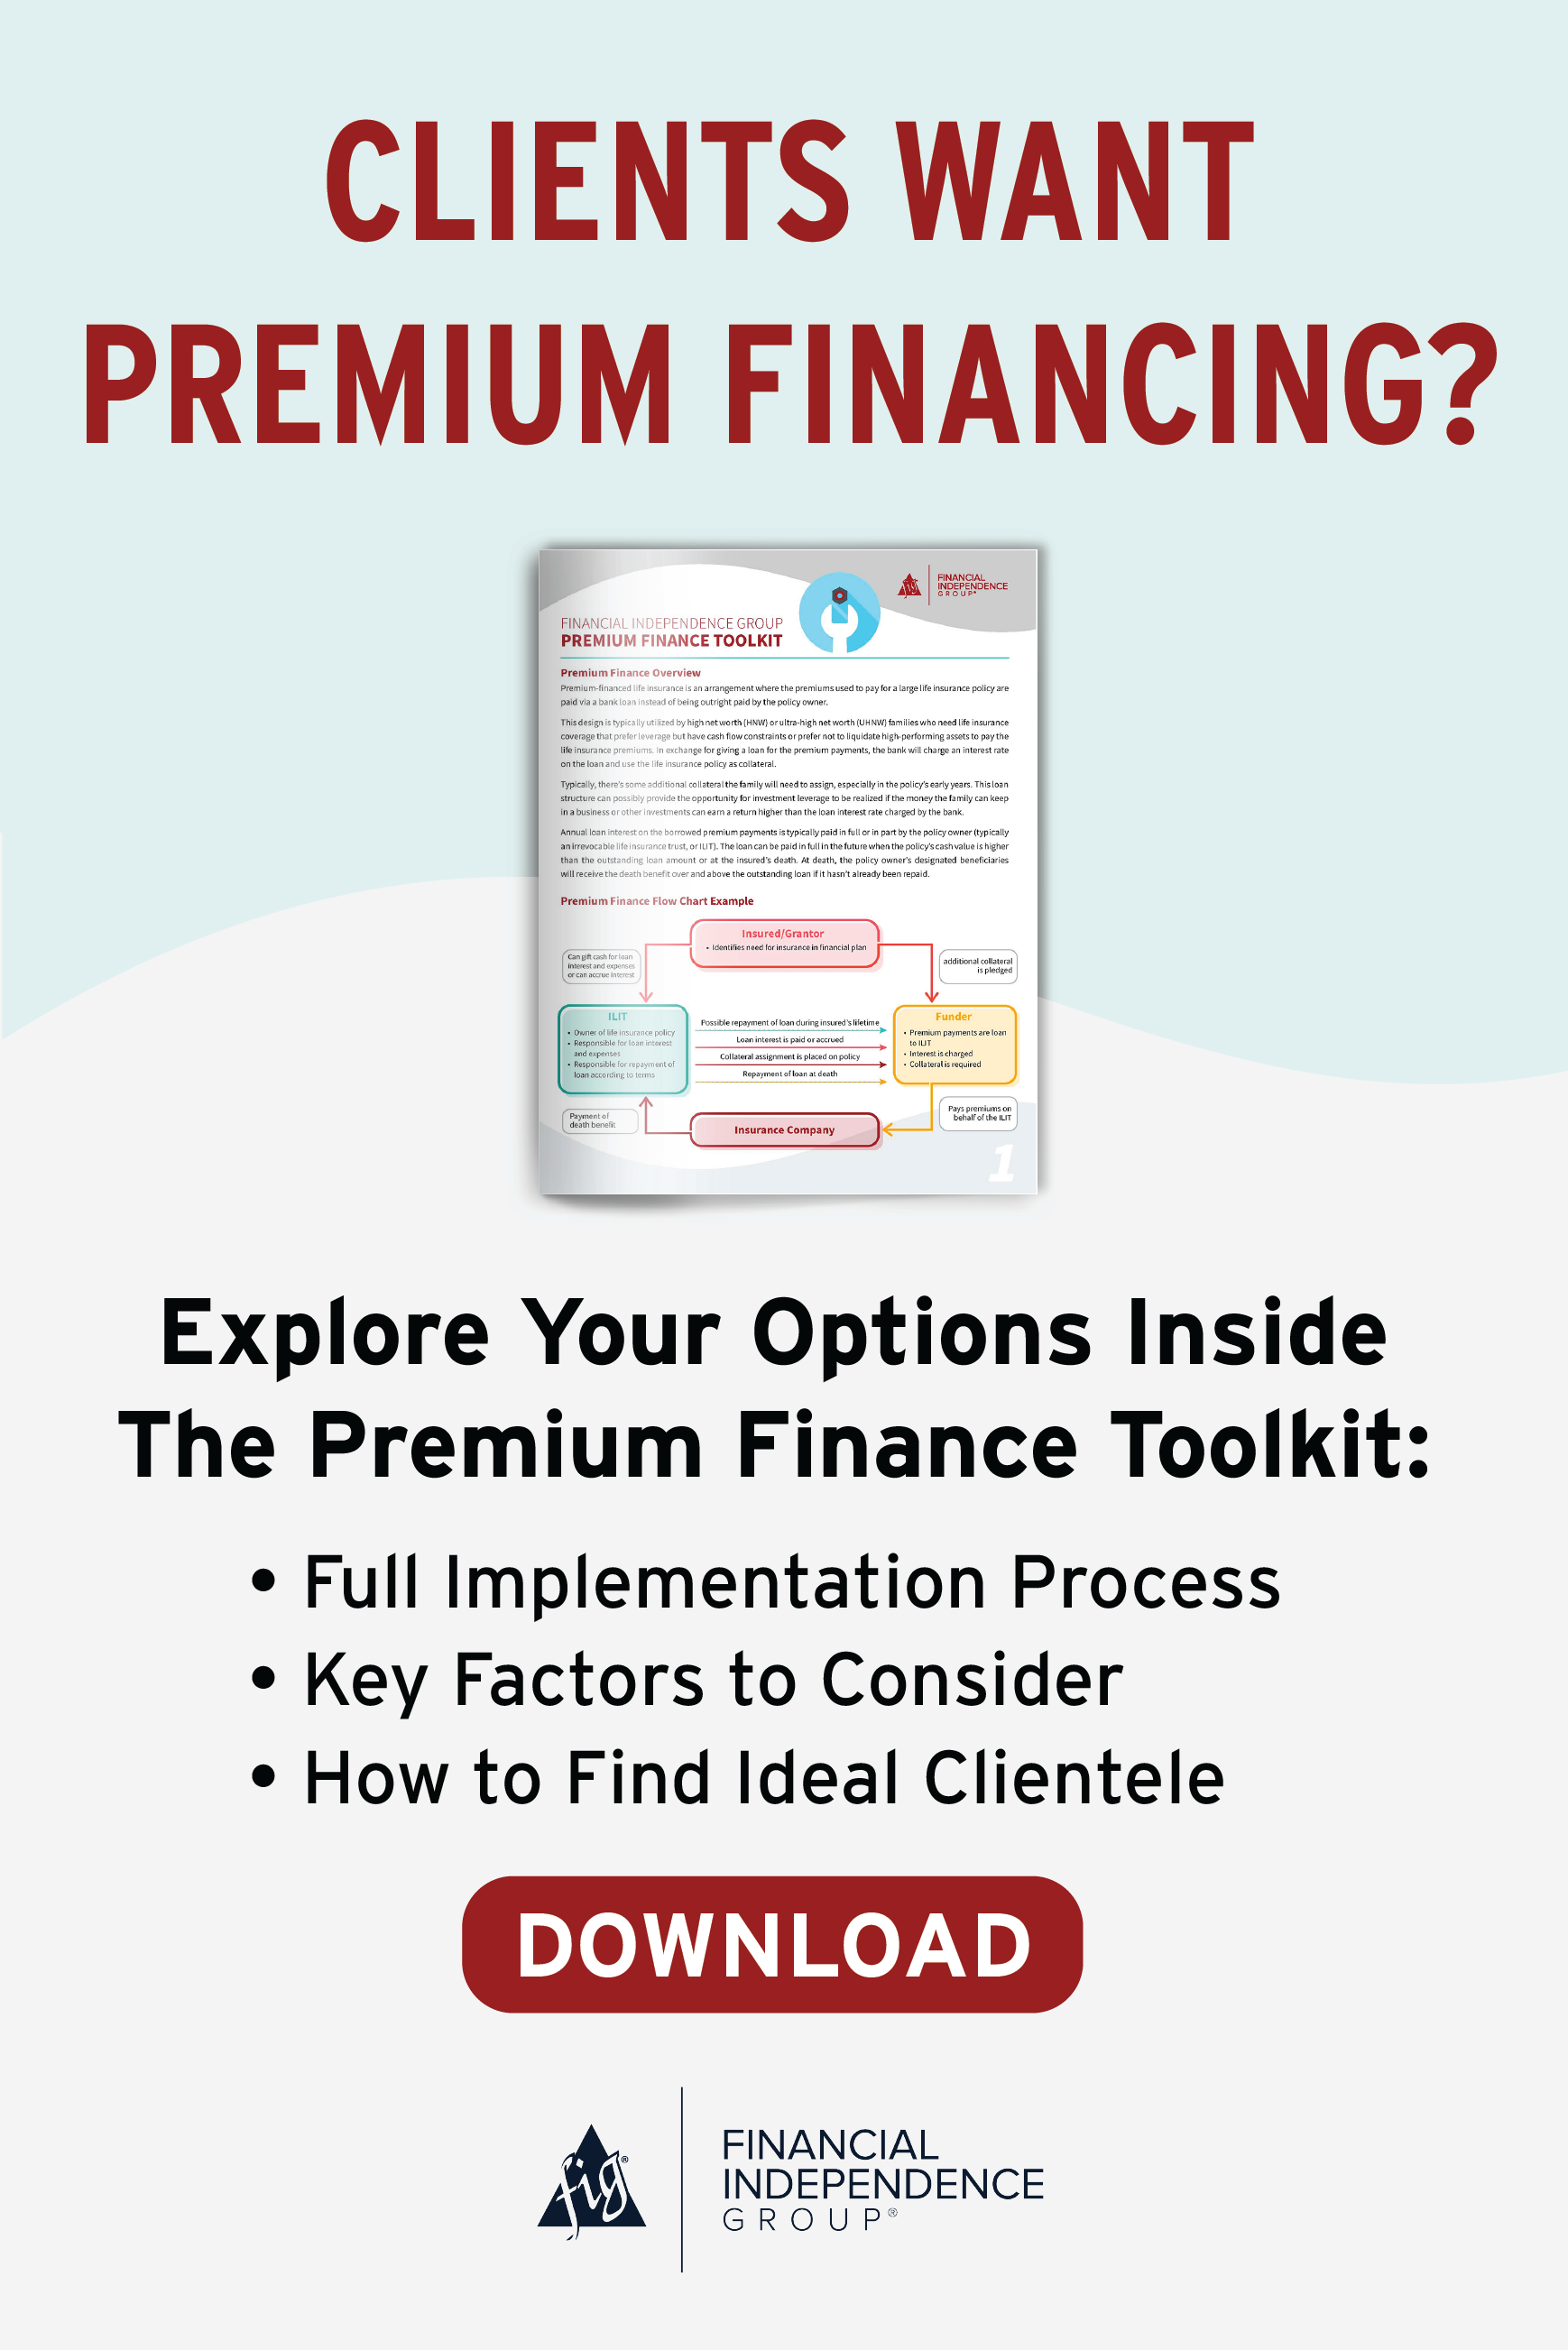 digital advertisement to download the free premium finance toolkit